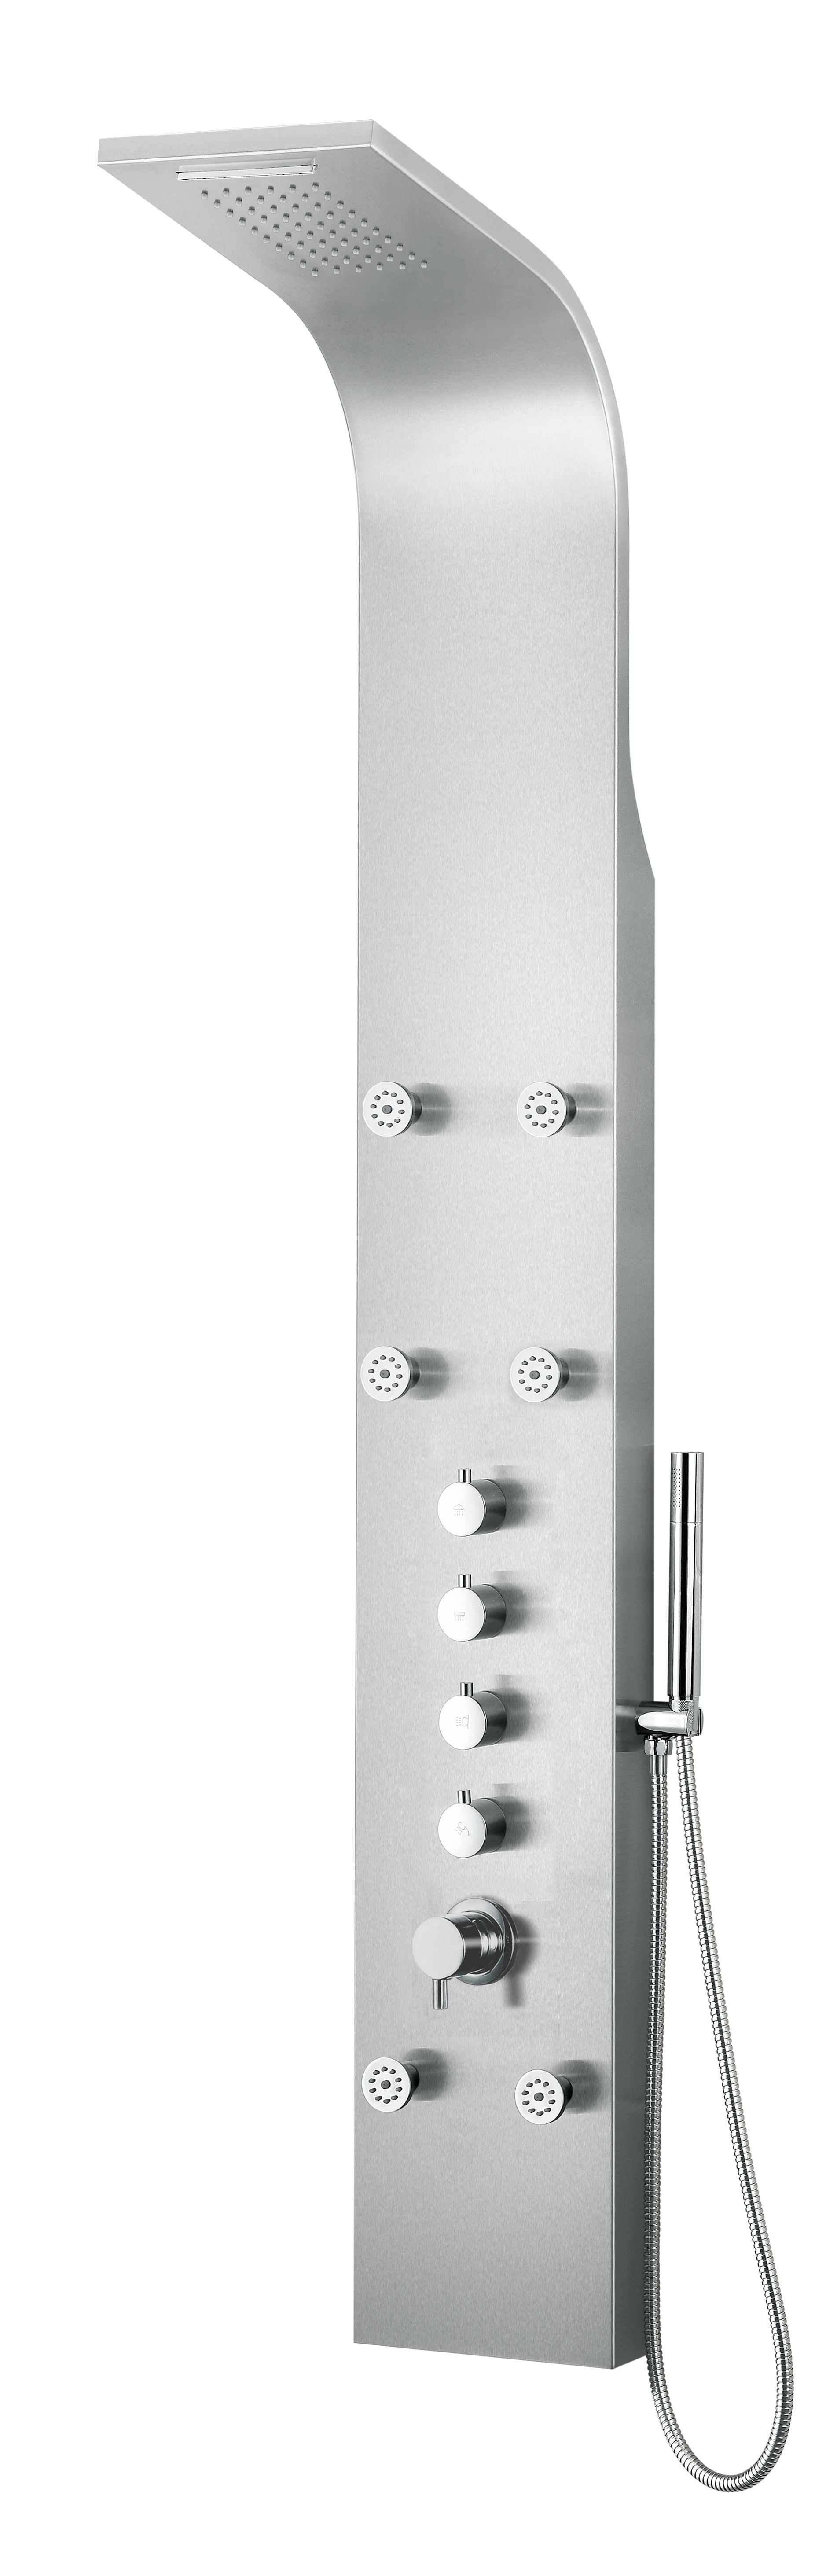 Absp40 Modern Stainless Steel Shower Panel With 6 Body Sprays